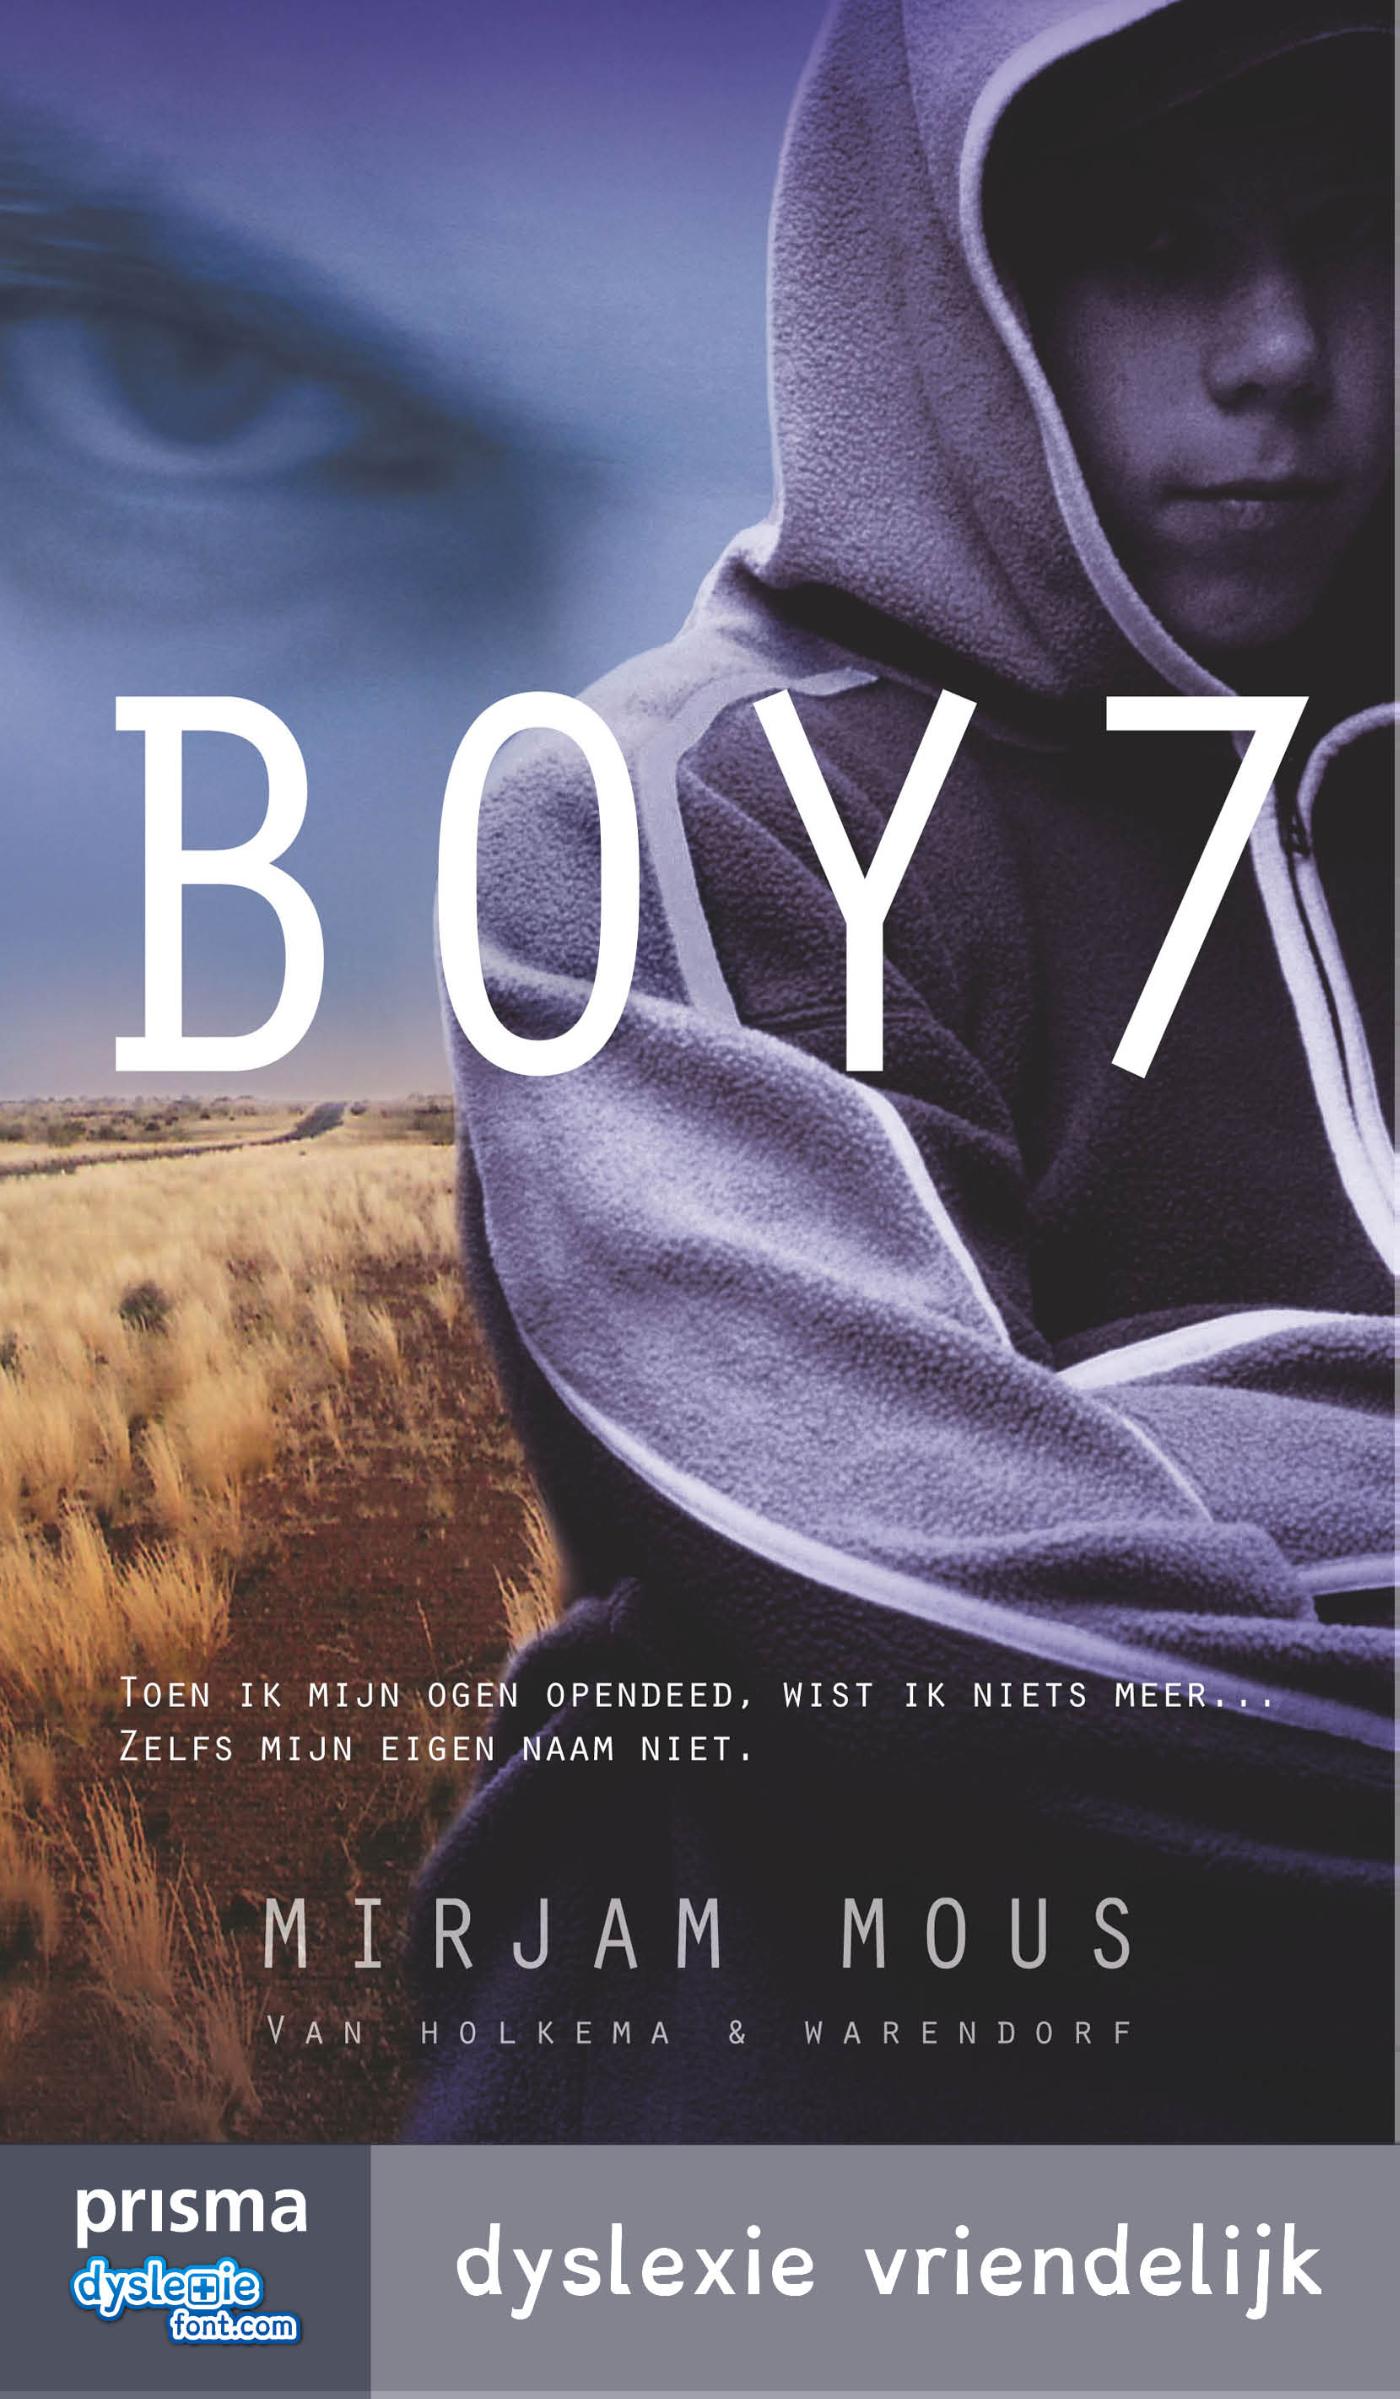 Boy 7 (Ebook)